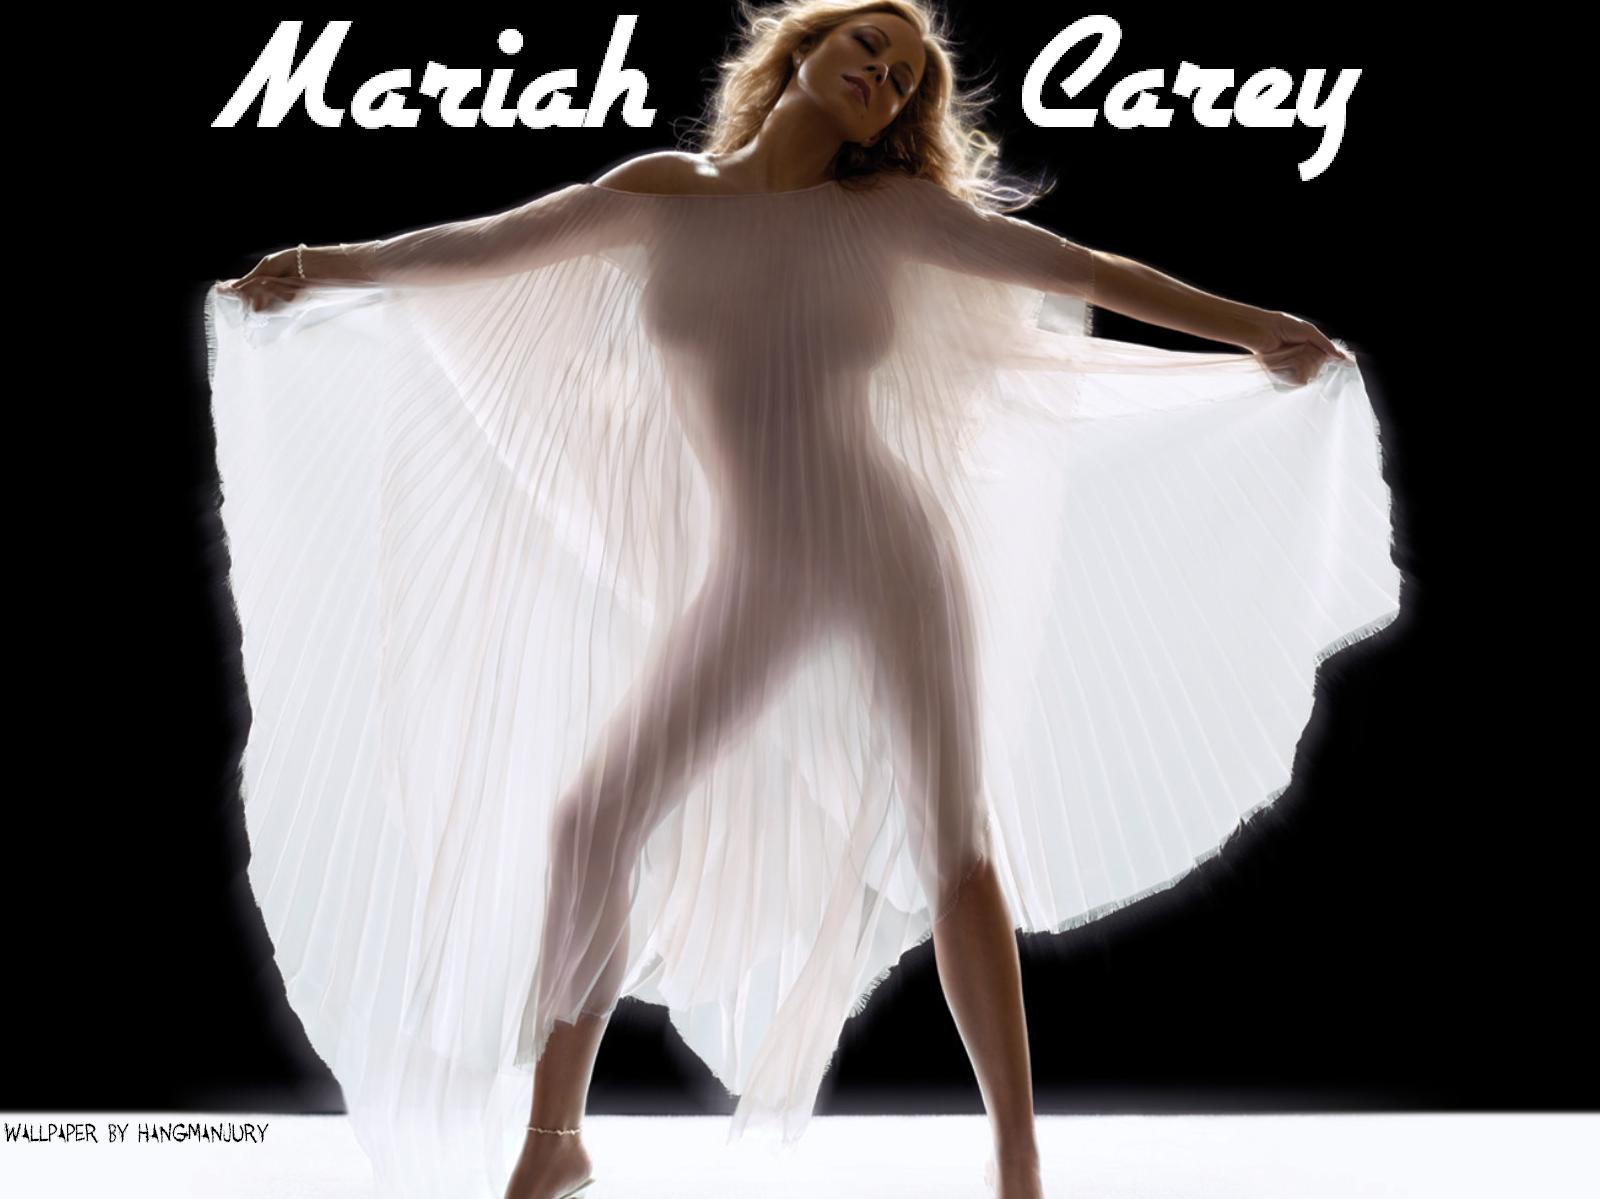 Mariah carey 65